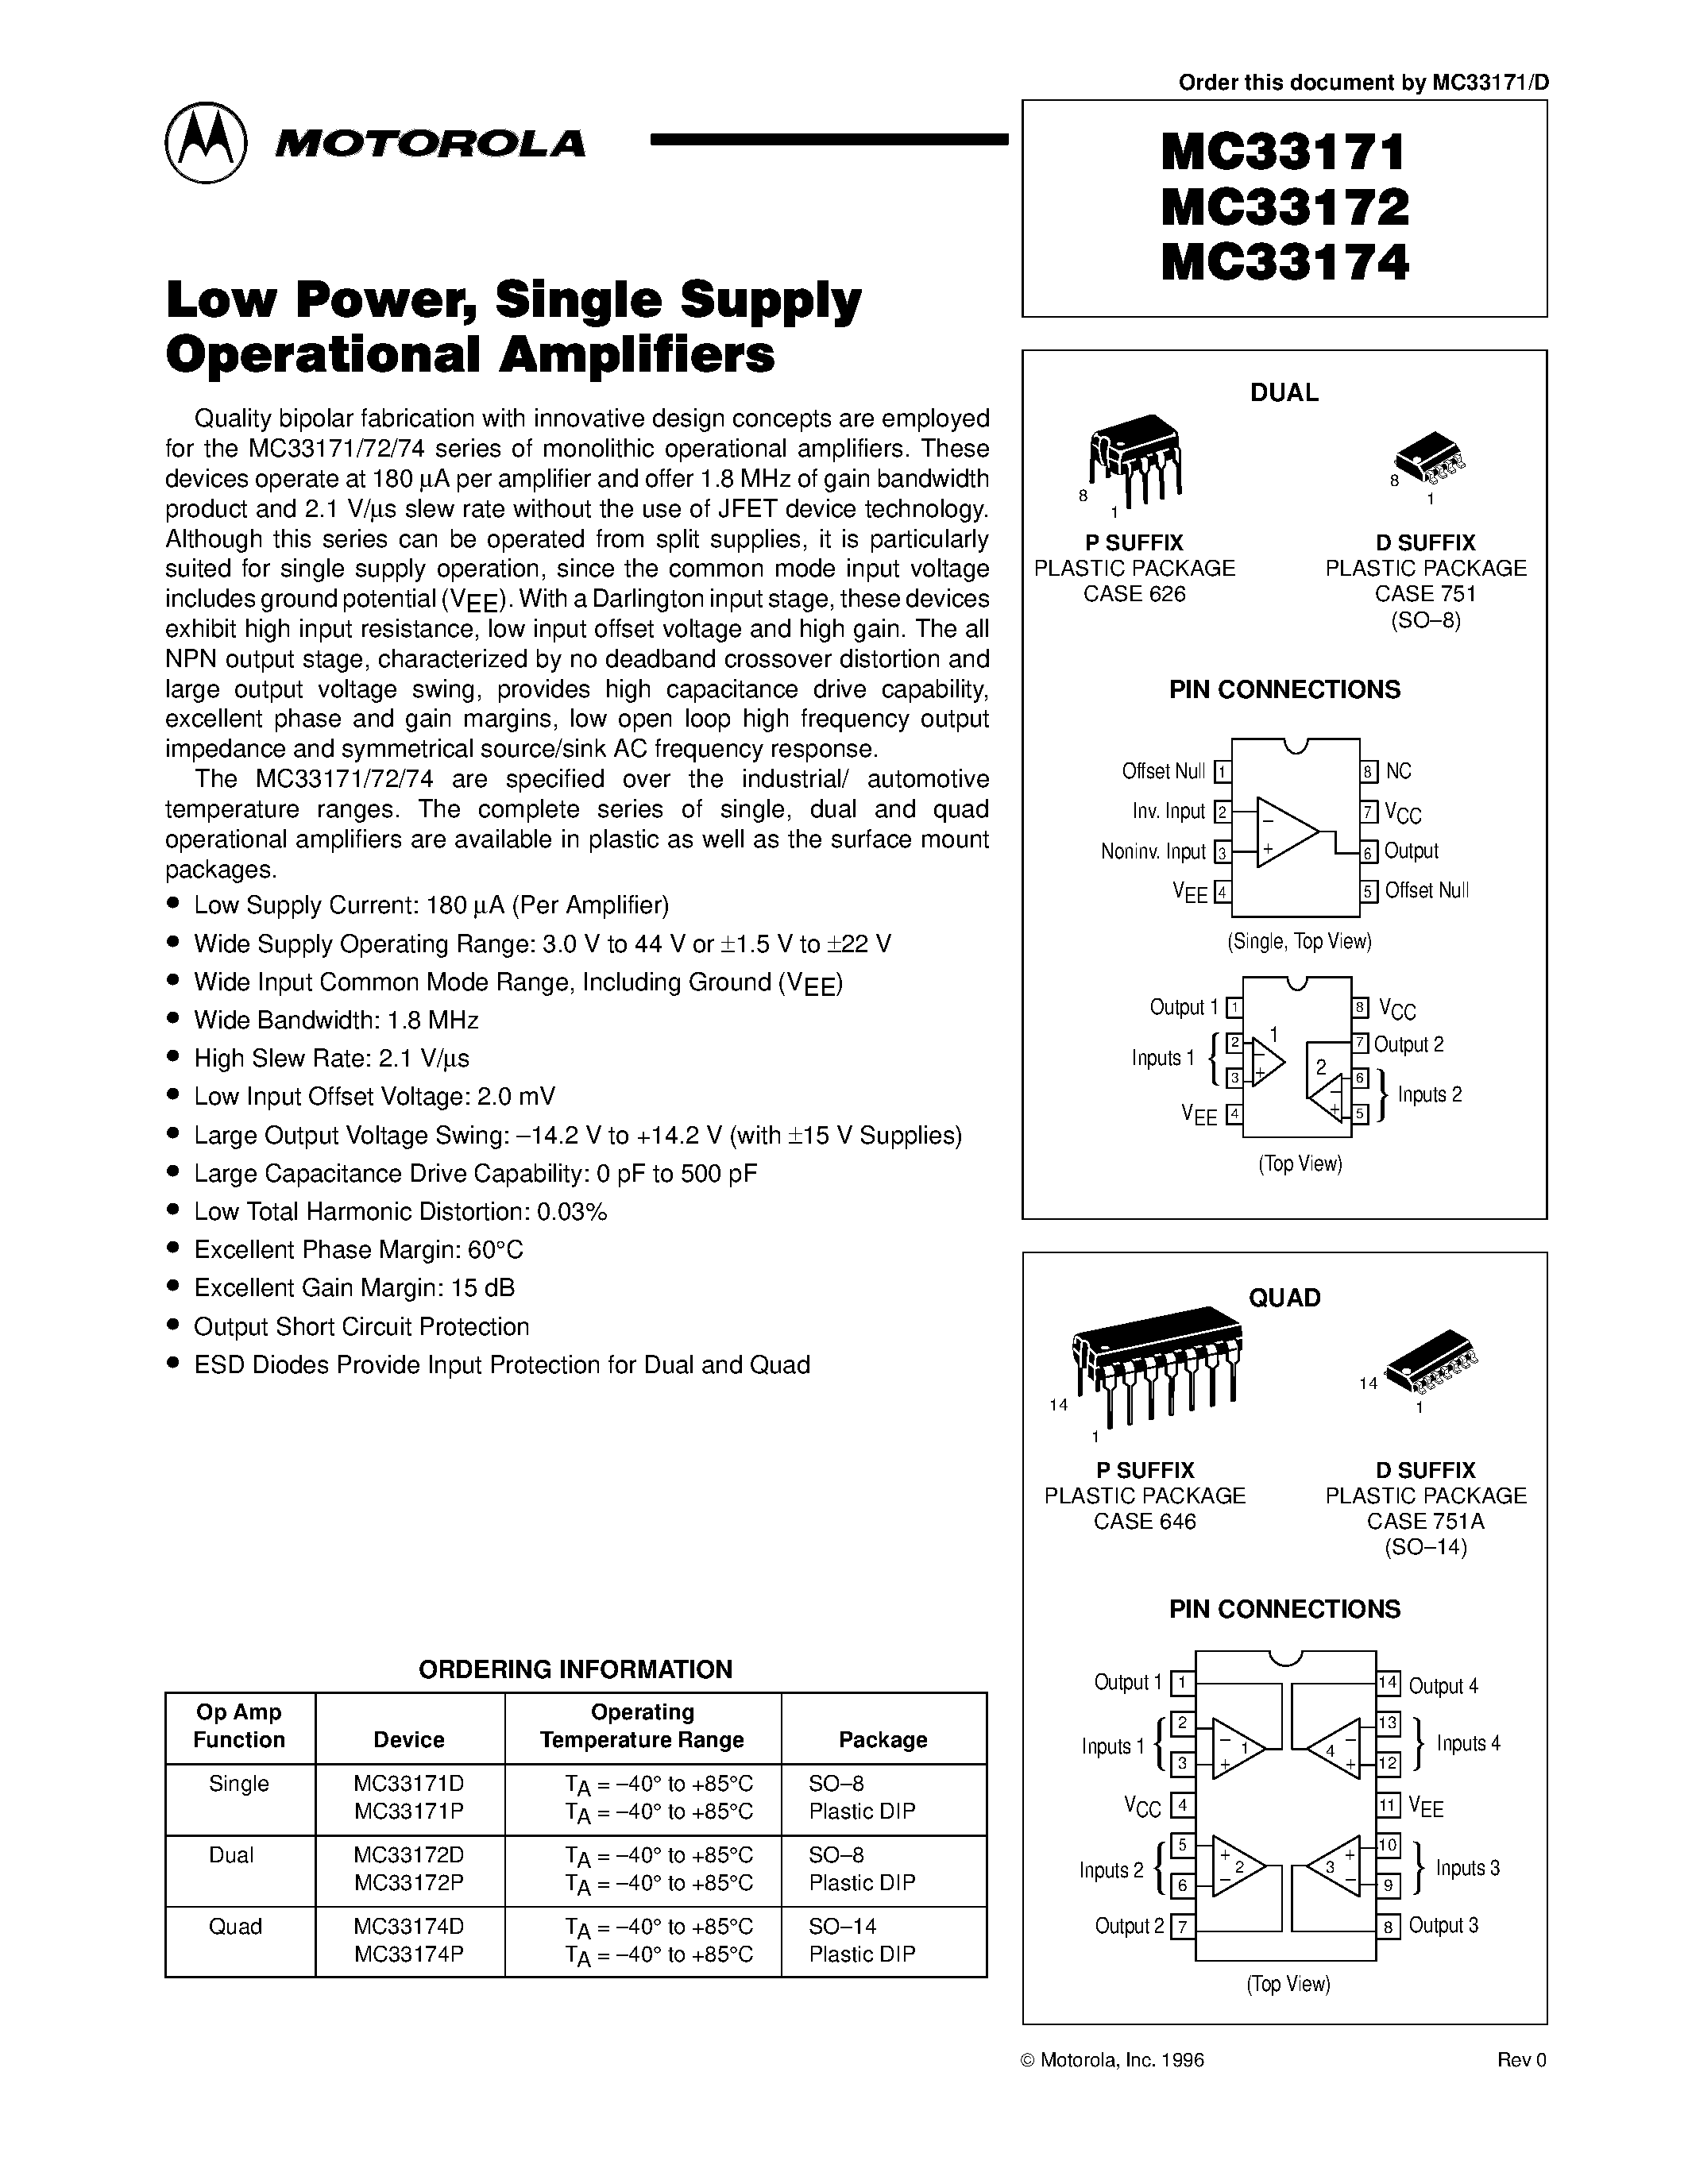 Даташит MC33171 - (MC33172/MC33174) Low Power / Single Supply Operational Amplifiers страница 1